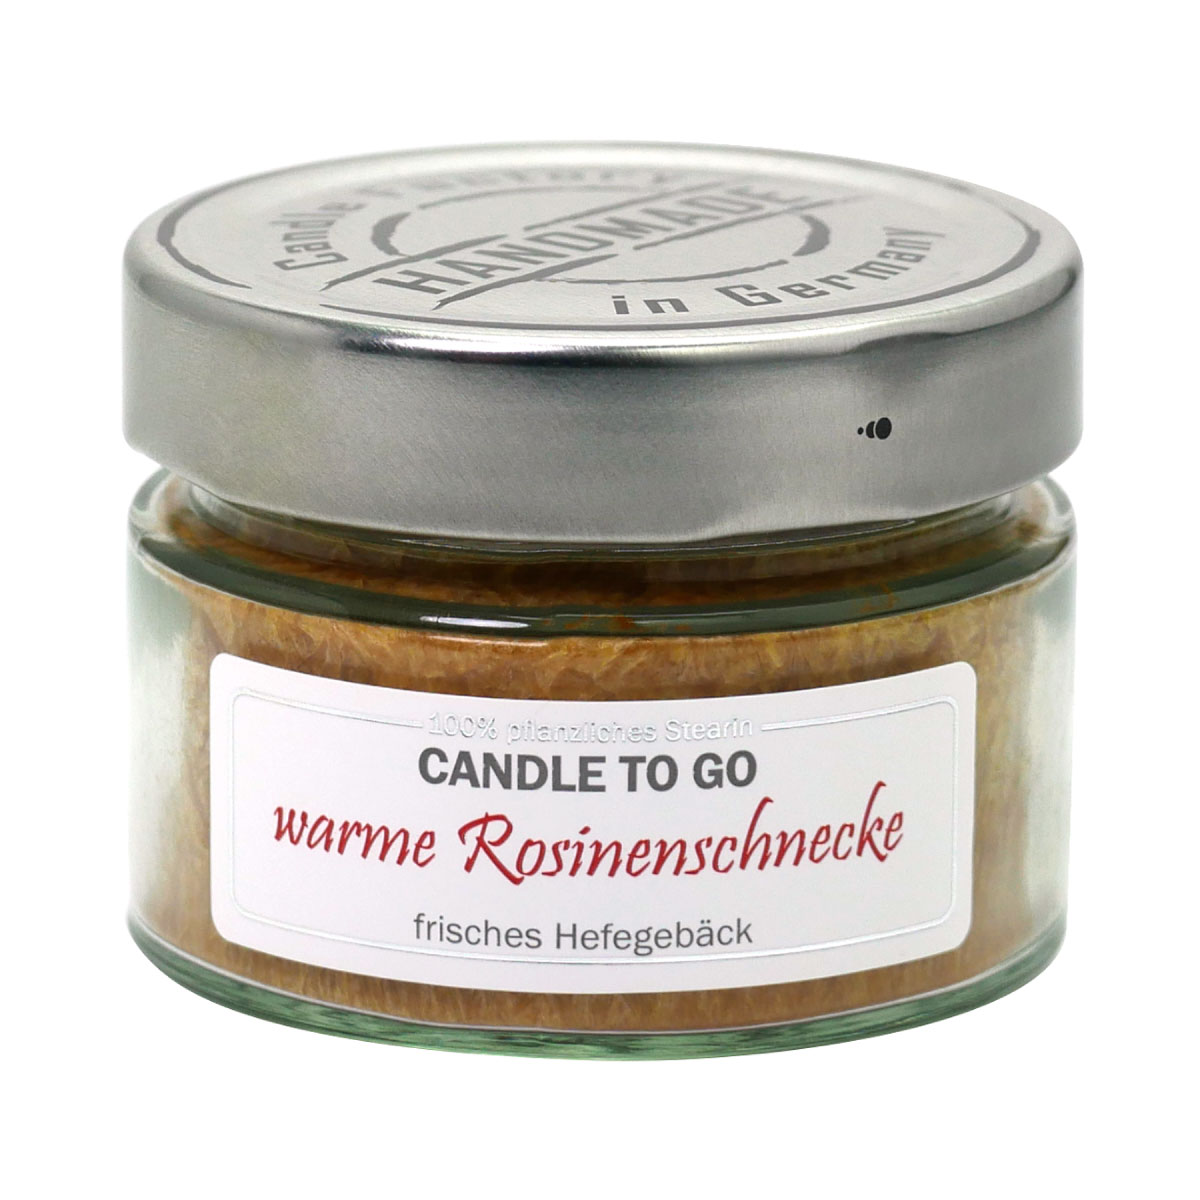 Warme Rosinenschnecke - Candle to Go Duftkerze von Candle Factory